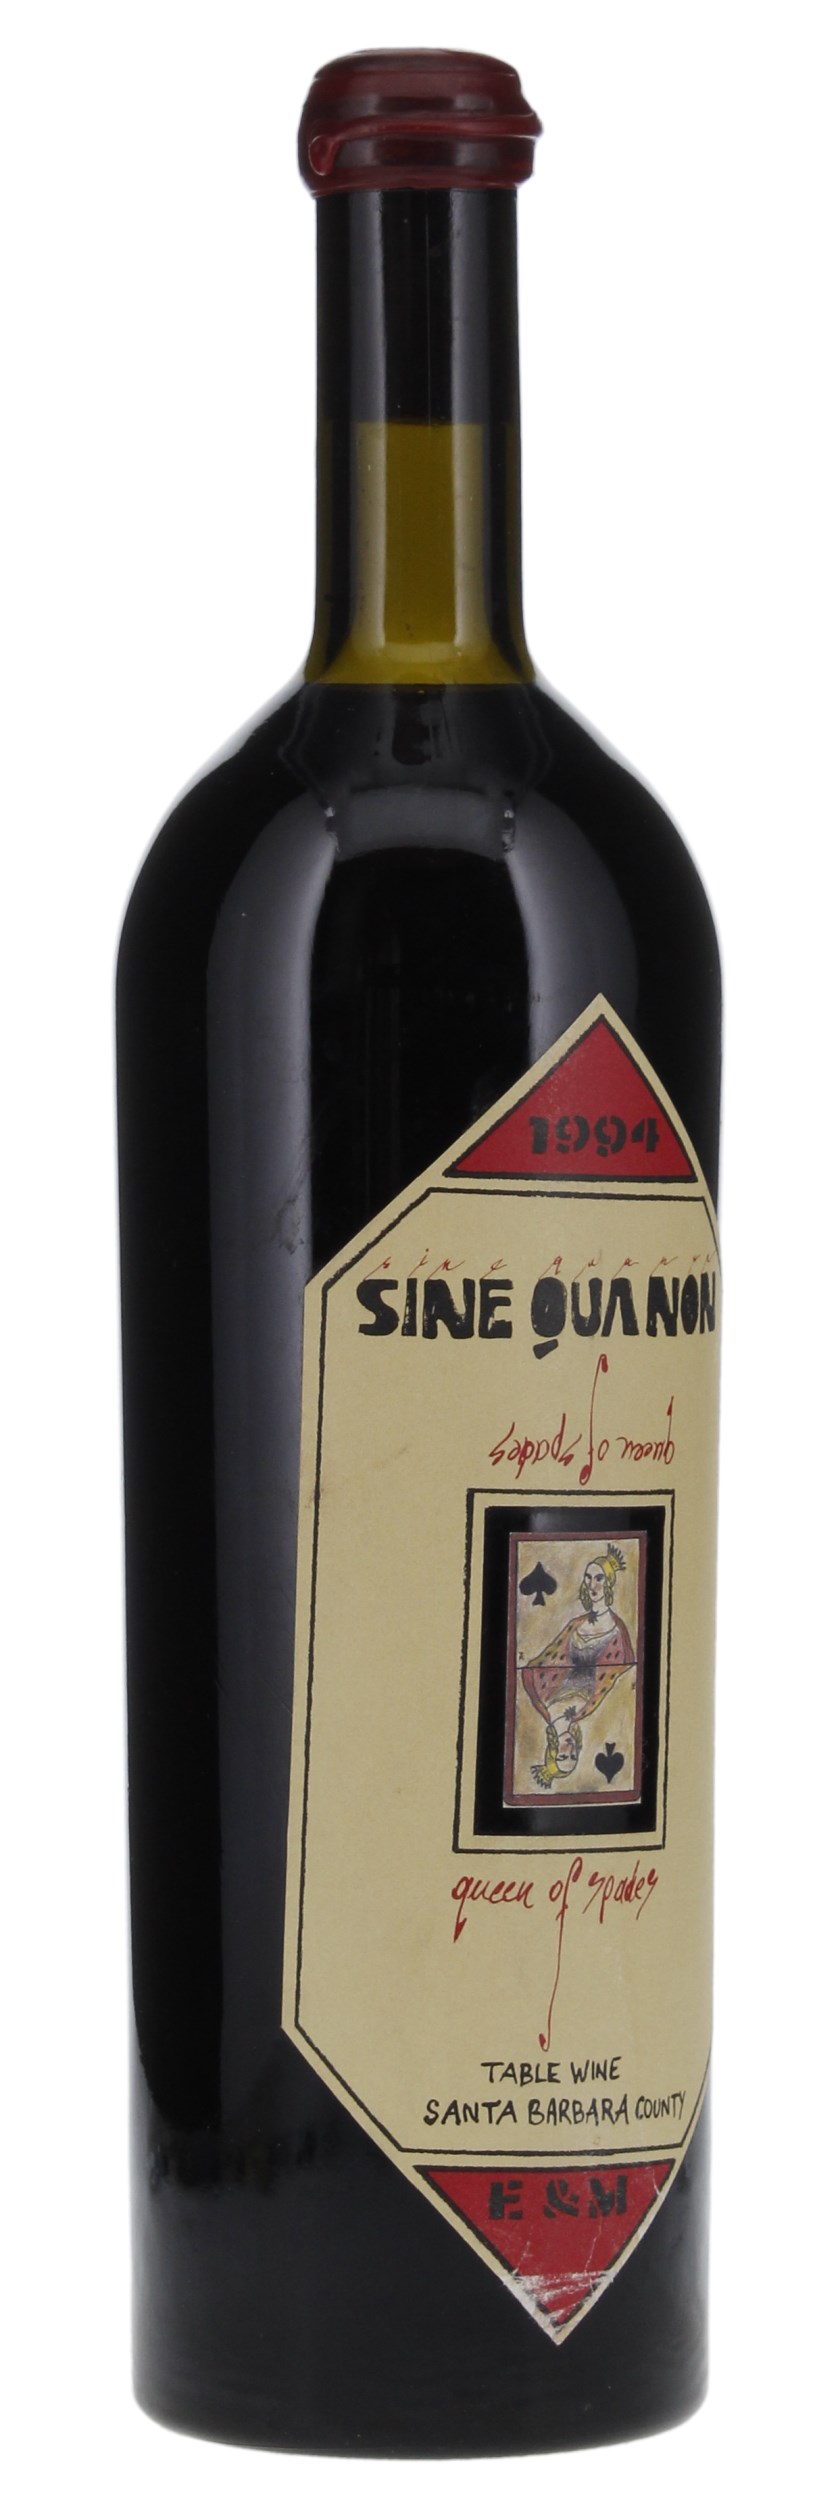 1994 Sine Qua Non Queen of Spades, 750ml